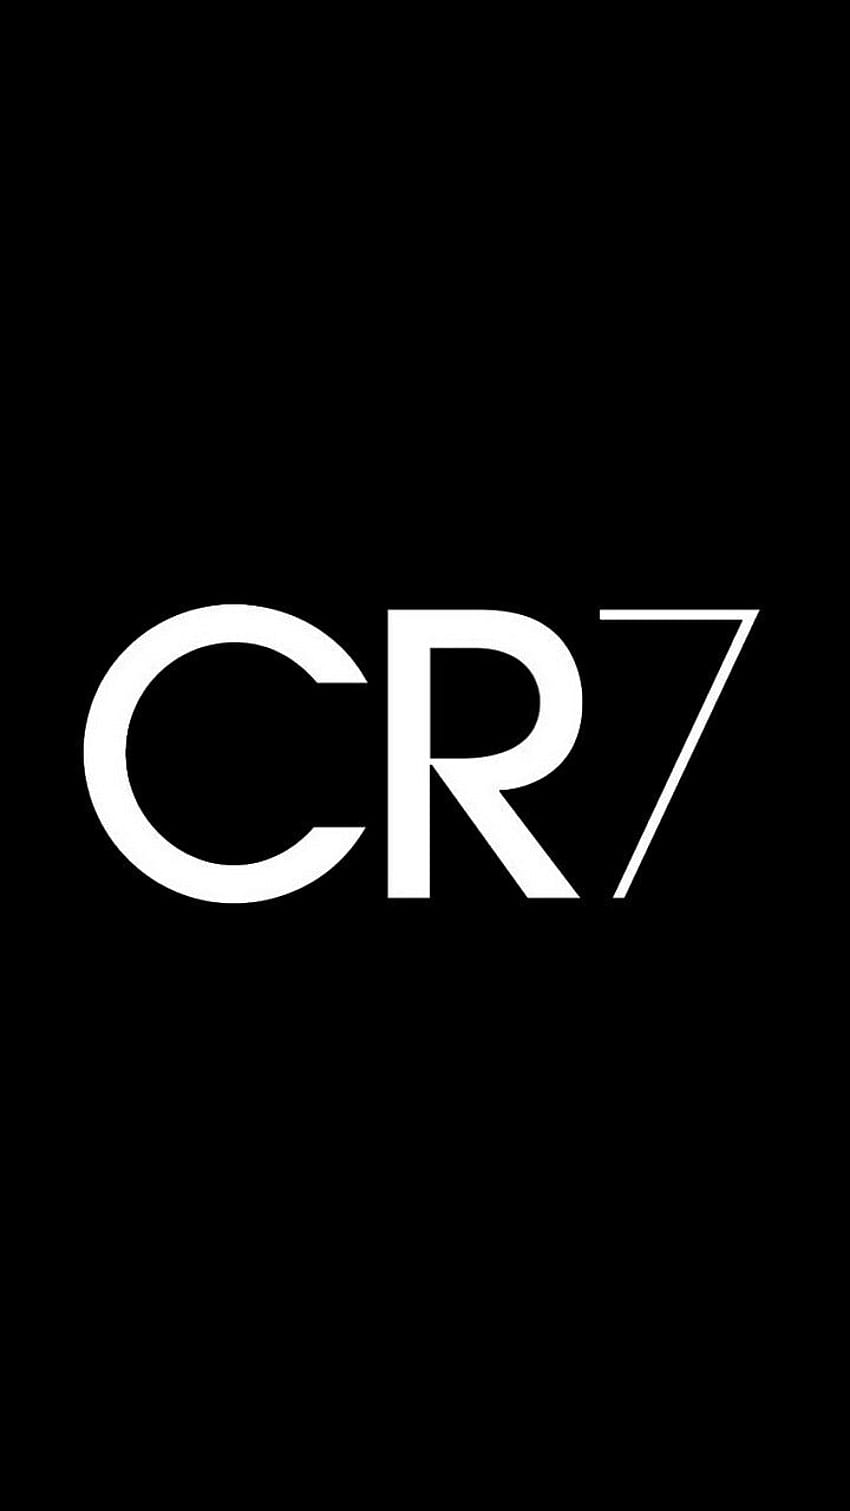 Logo Cr7 untuk android. Gaya Cristiano ronaldo, Real madrid cristiano ronaldo, sepak bola Ronaldo wallpaper ponsel HD